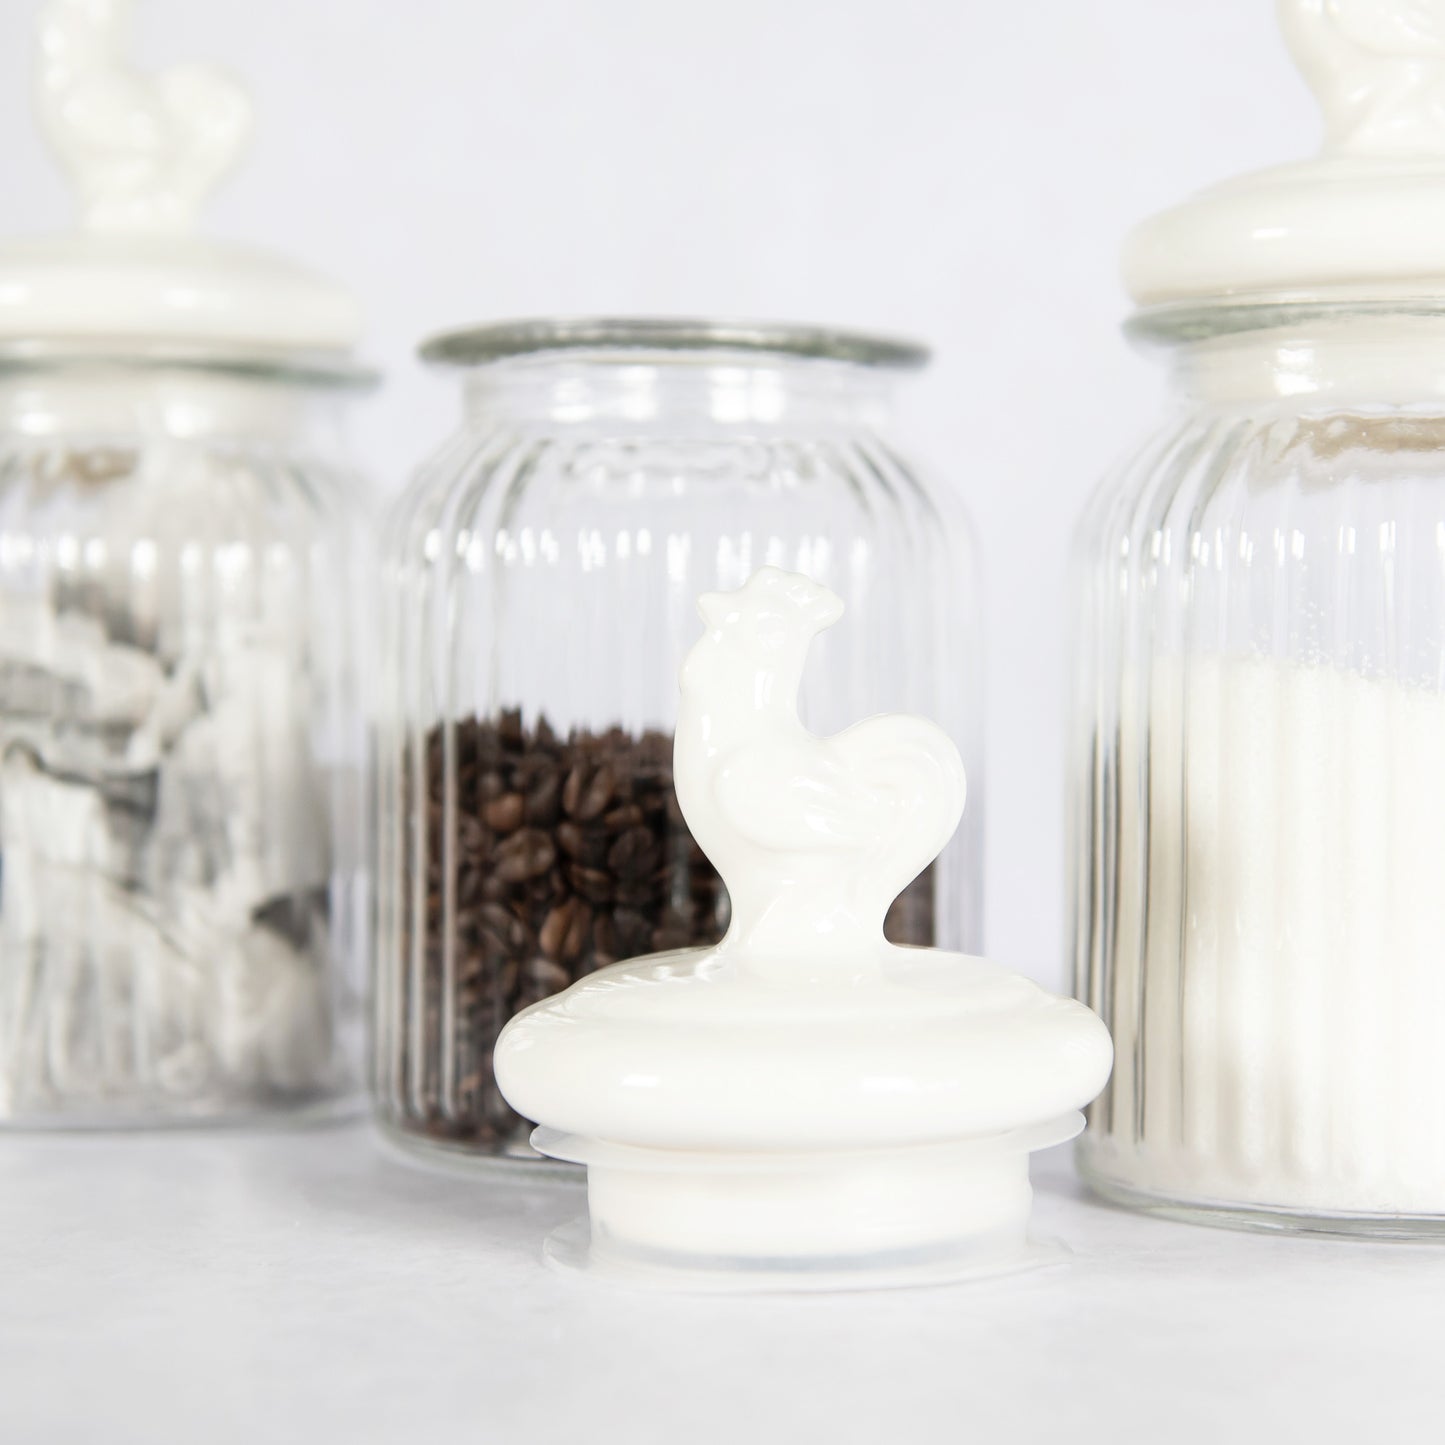 Set of 3 Ribbed Glass Jars with Ceramic Cockerel Lids